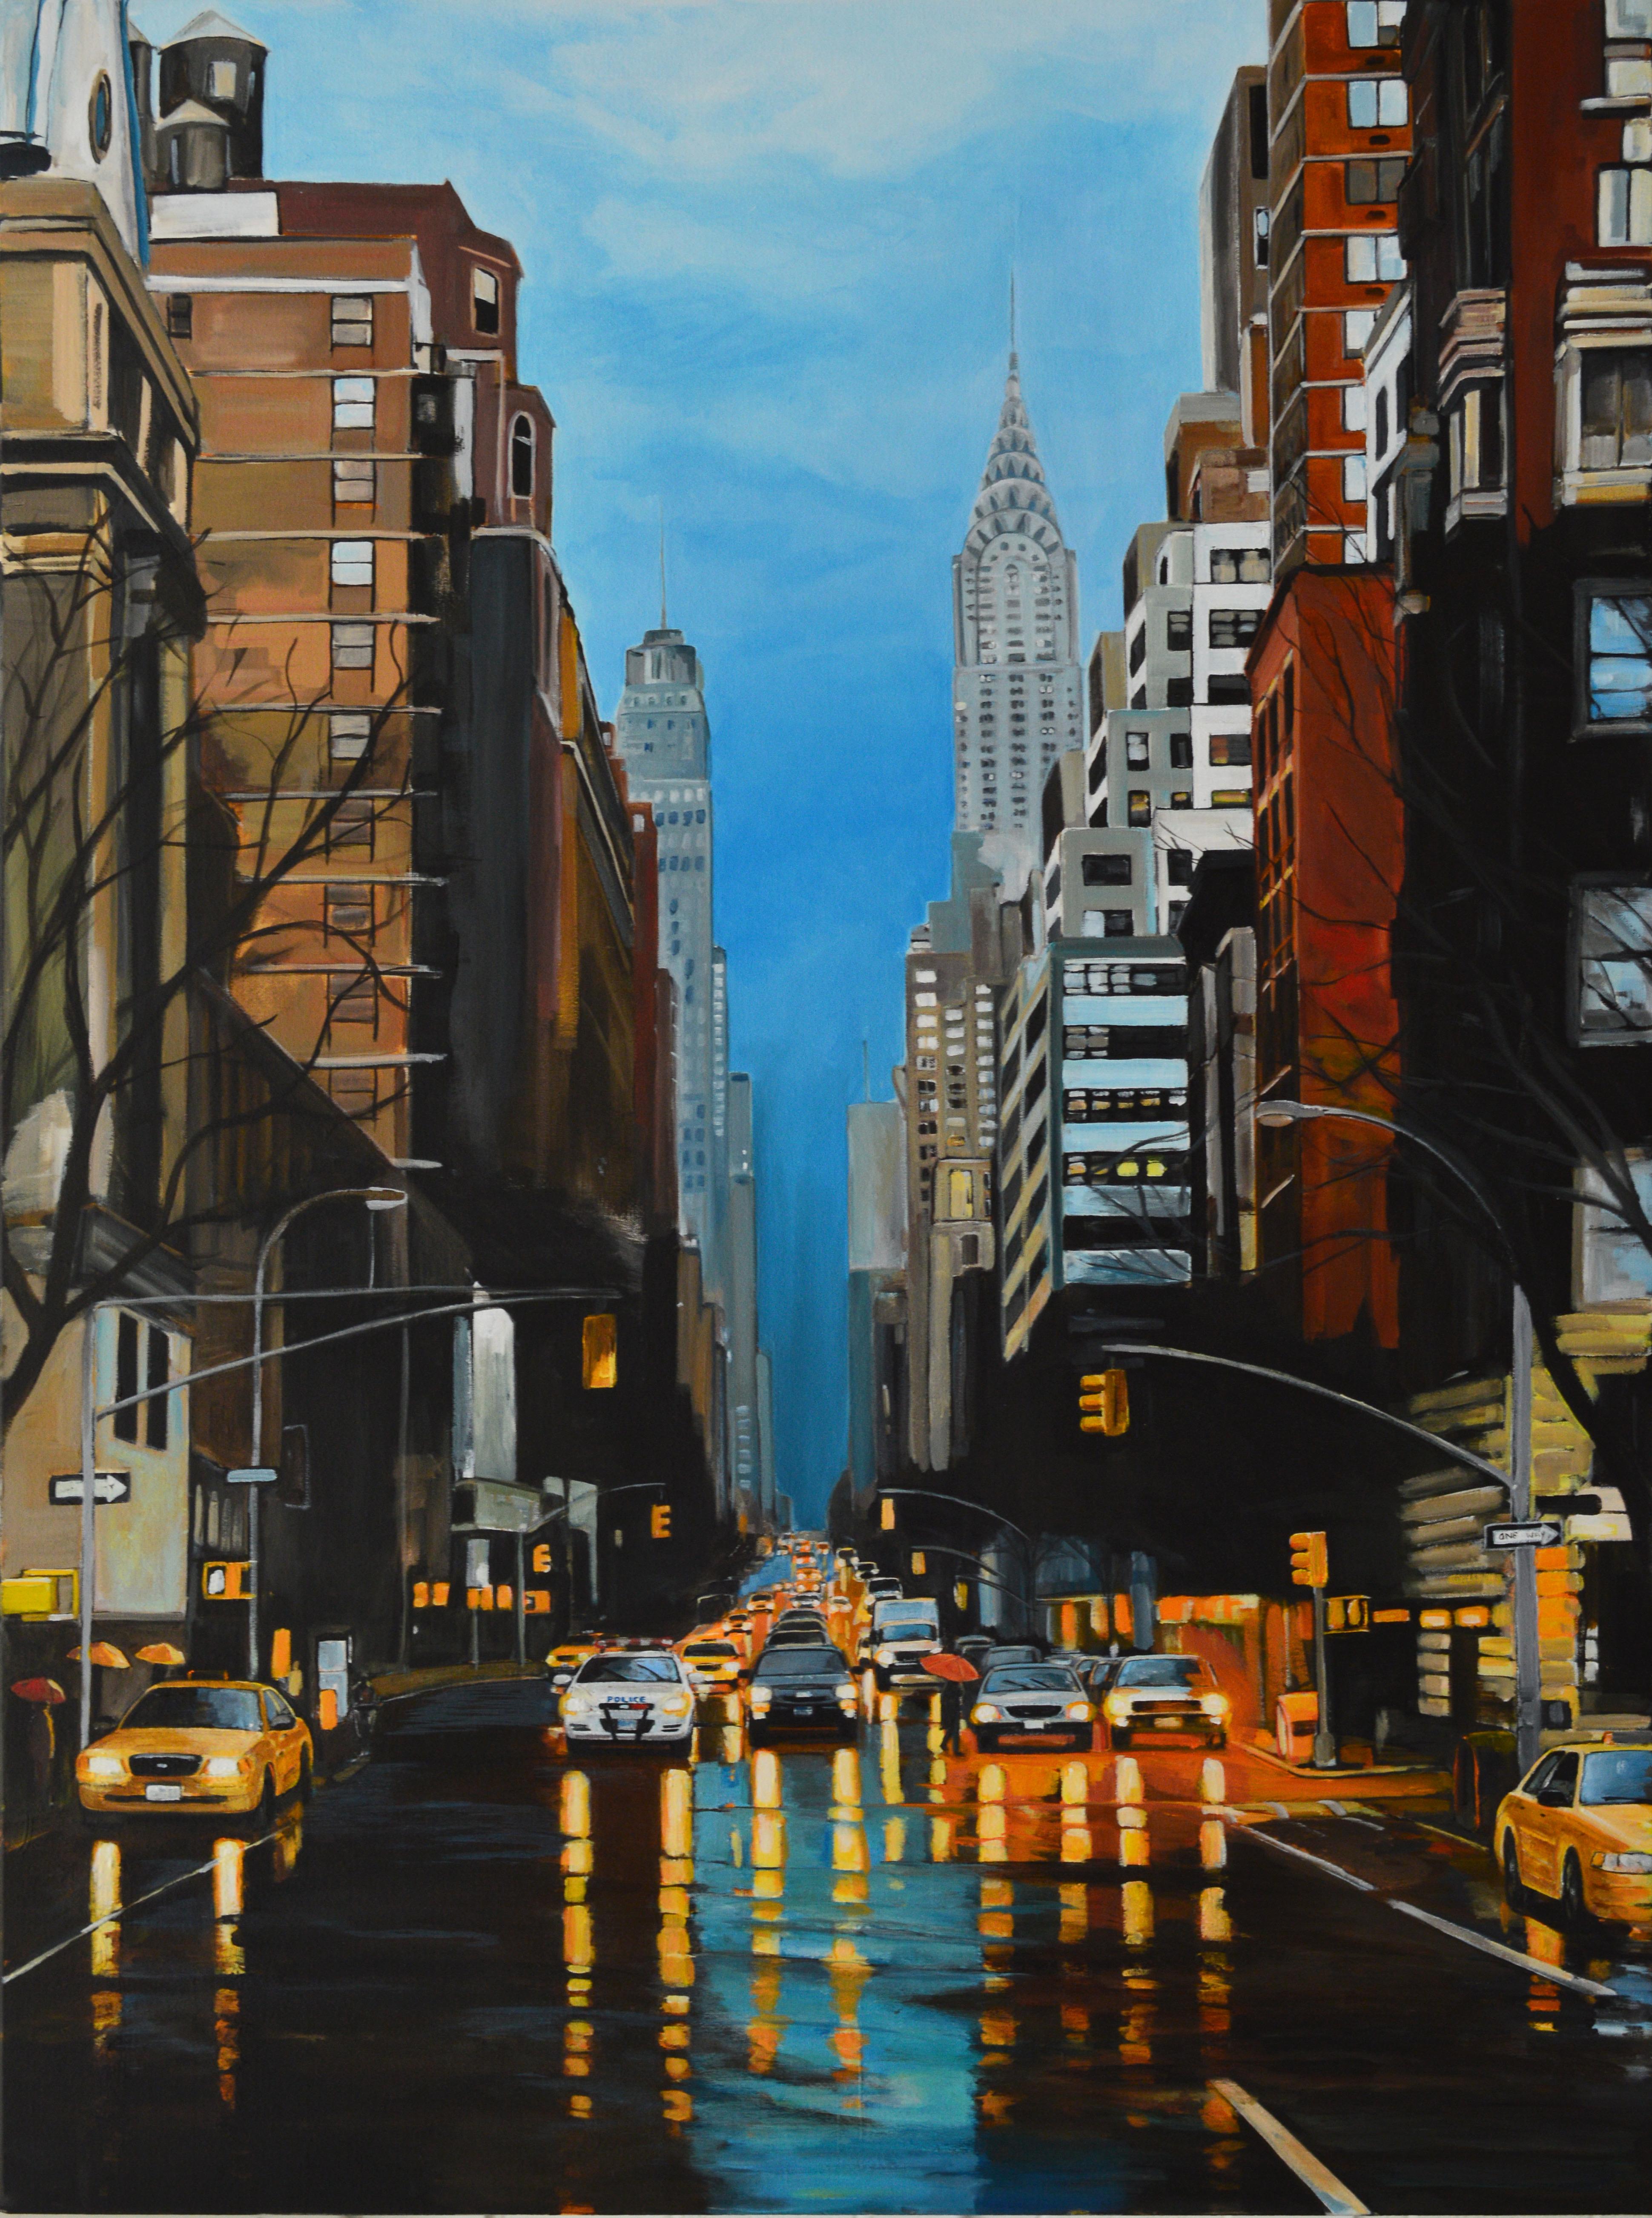 Painting of New York Storm Rain on 42nd Street by Leading British Urban Artist